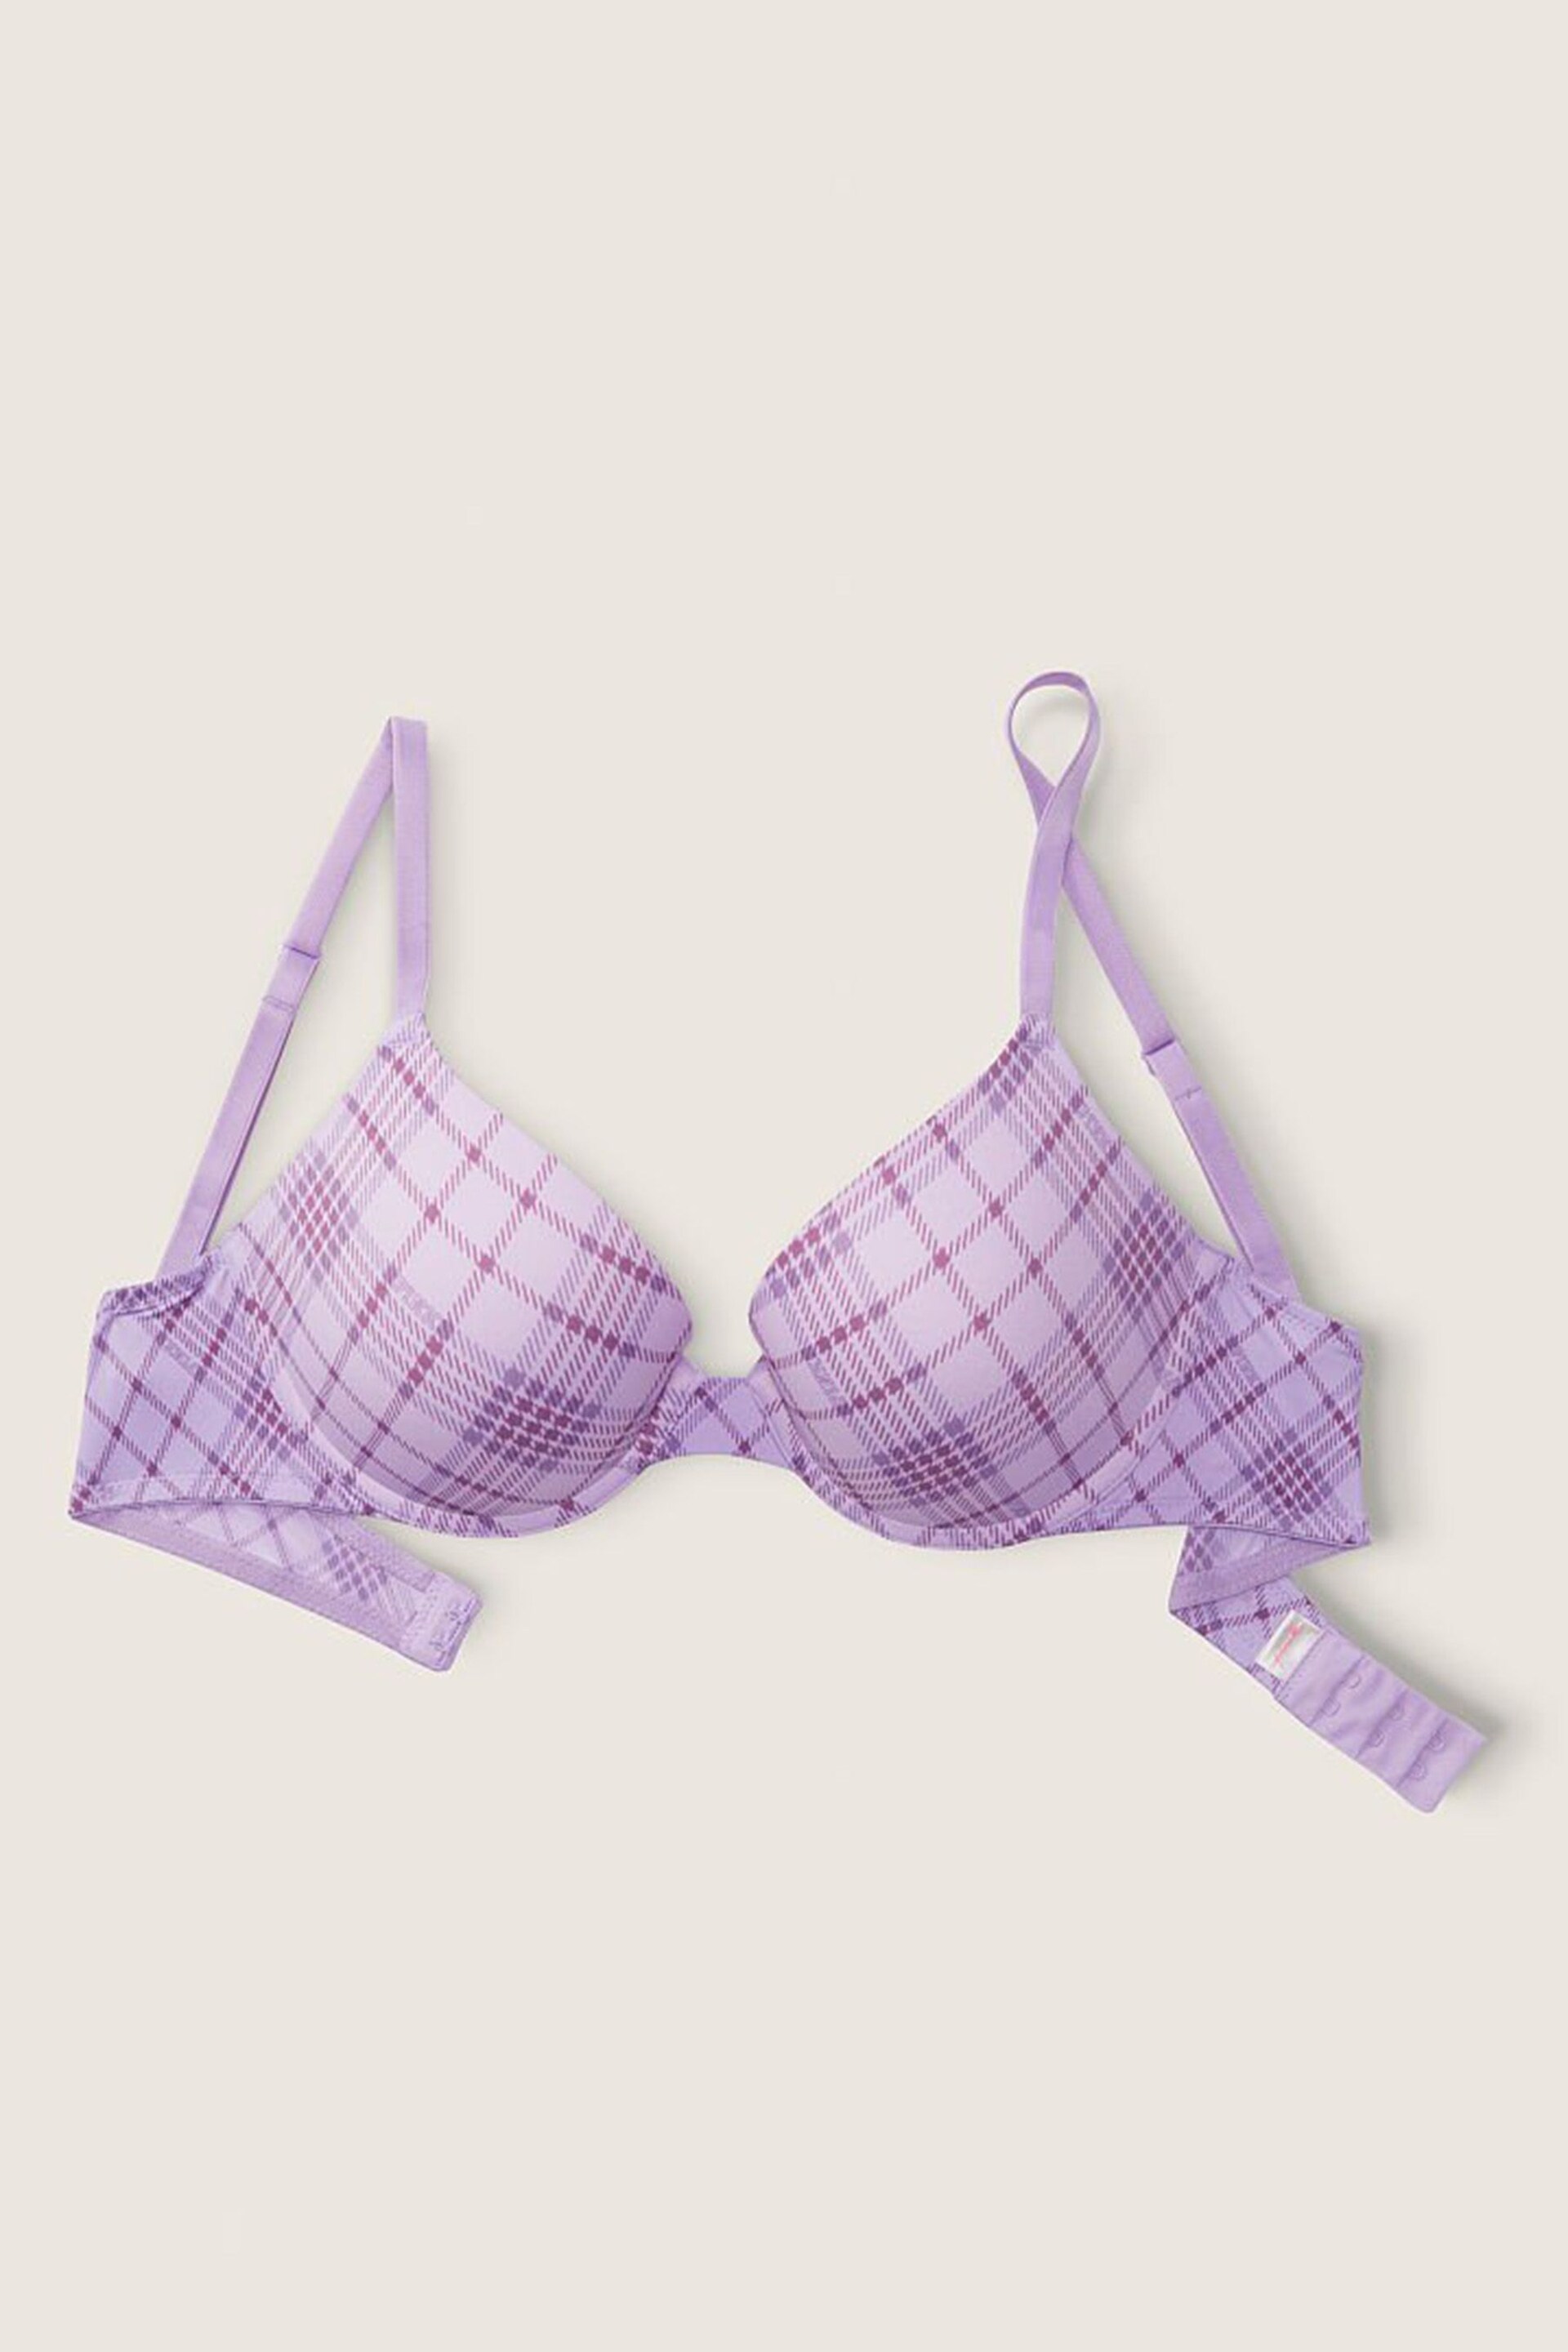 Victoria's Secret PINK Lavender Love Plaid Purple Smooth Push Up T-Shirt Bra - Image 4 of 5